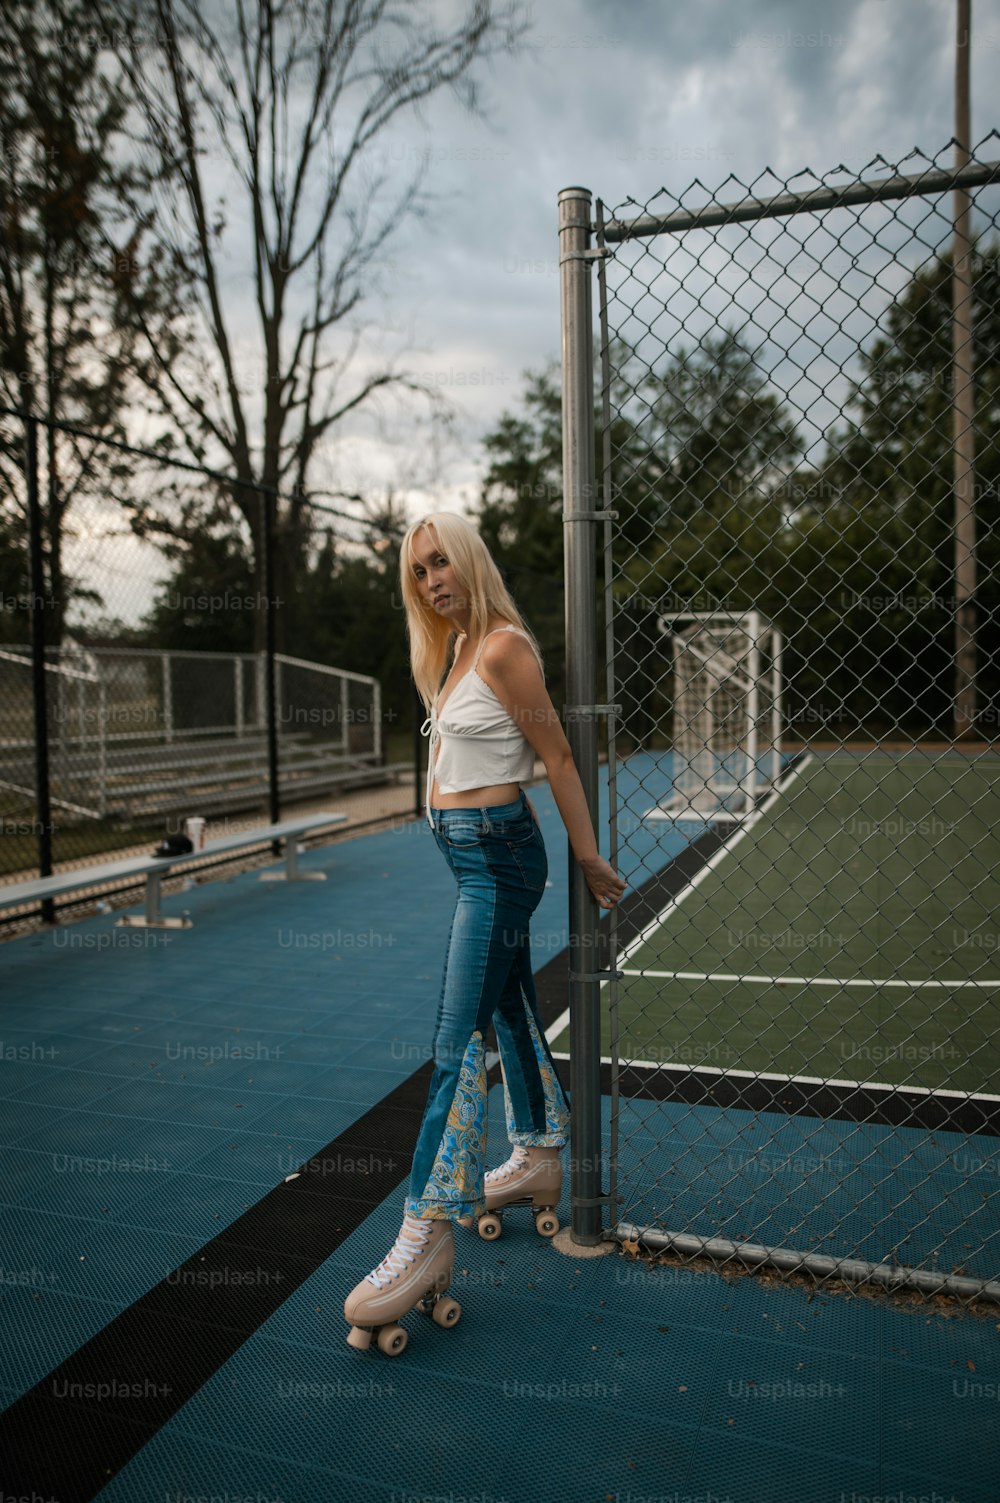 a woman standing on a skateboard on a tennis court